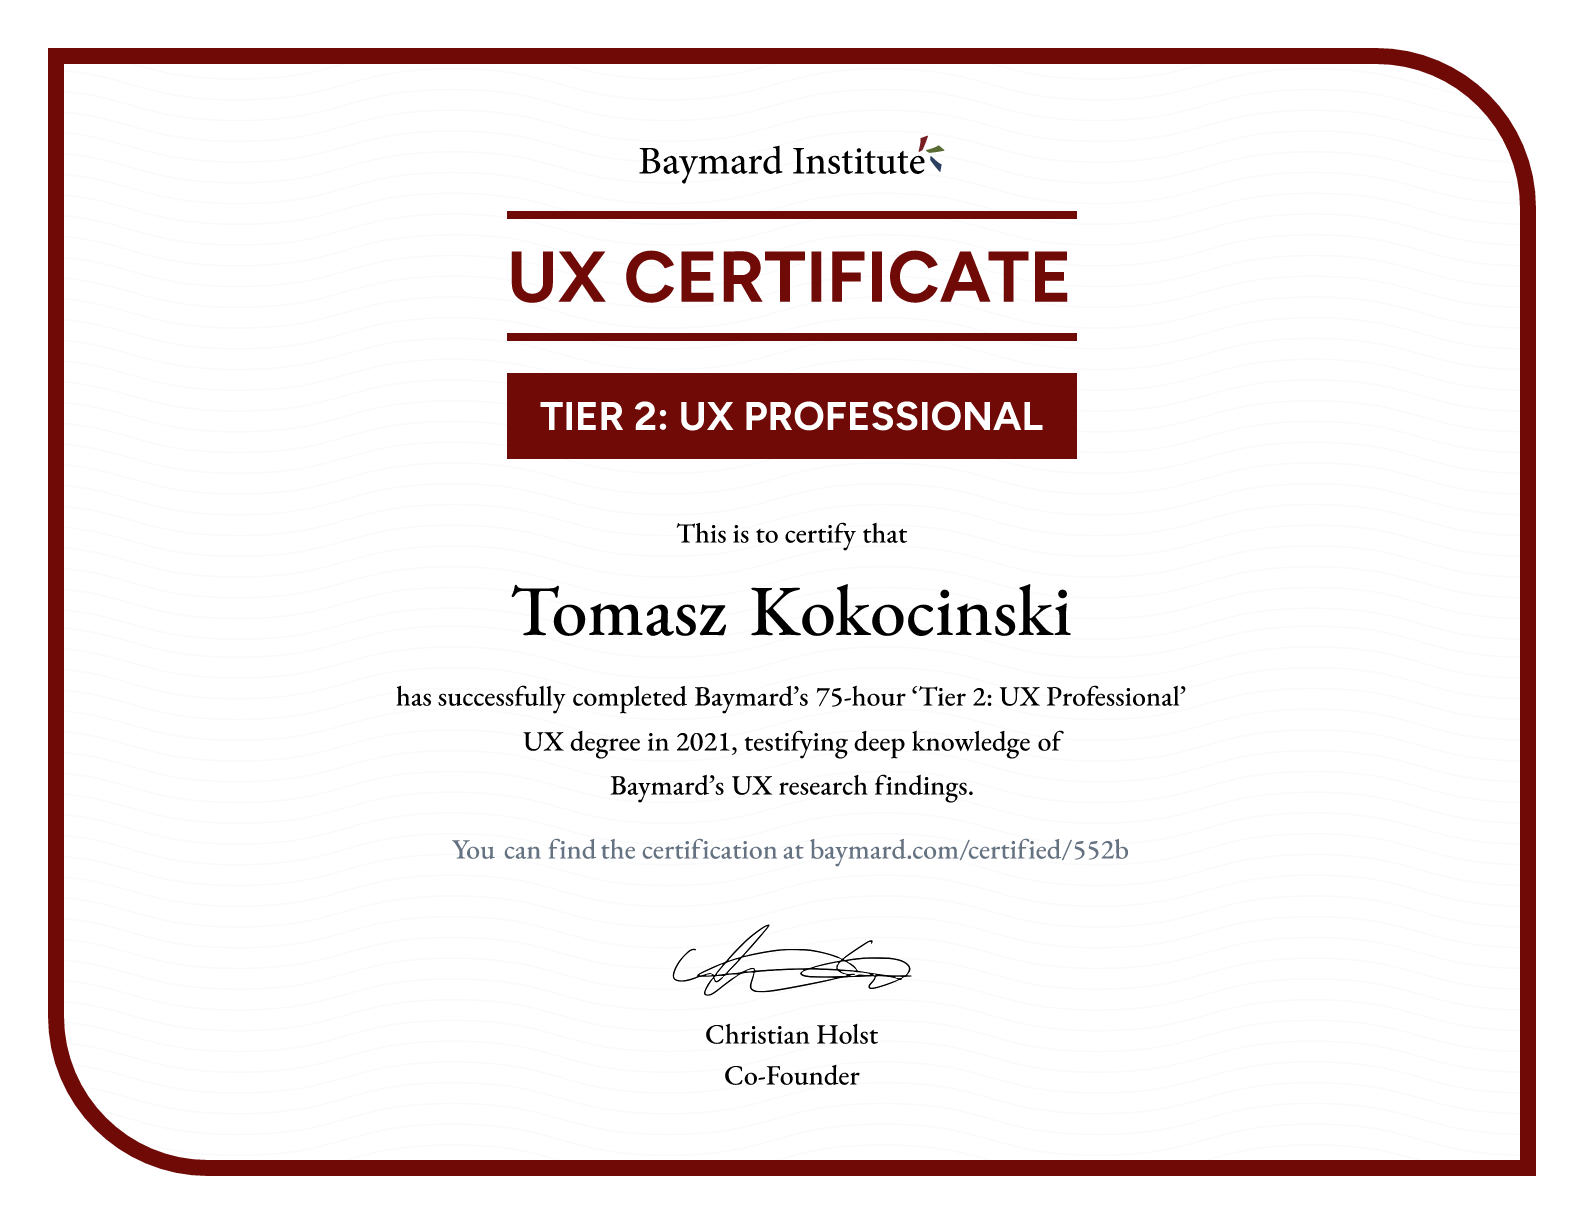 Tomasz Kokocinski’s certificate